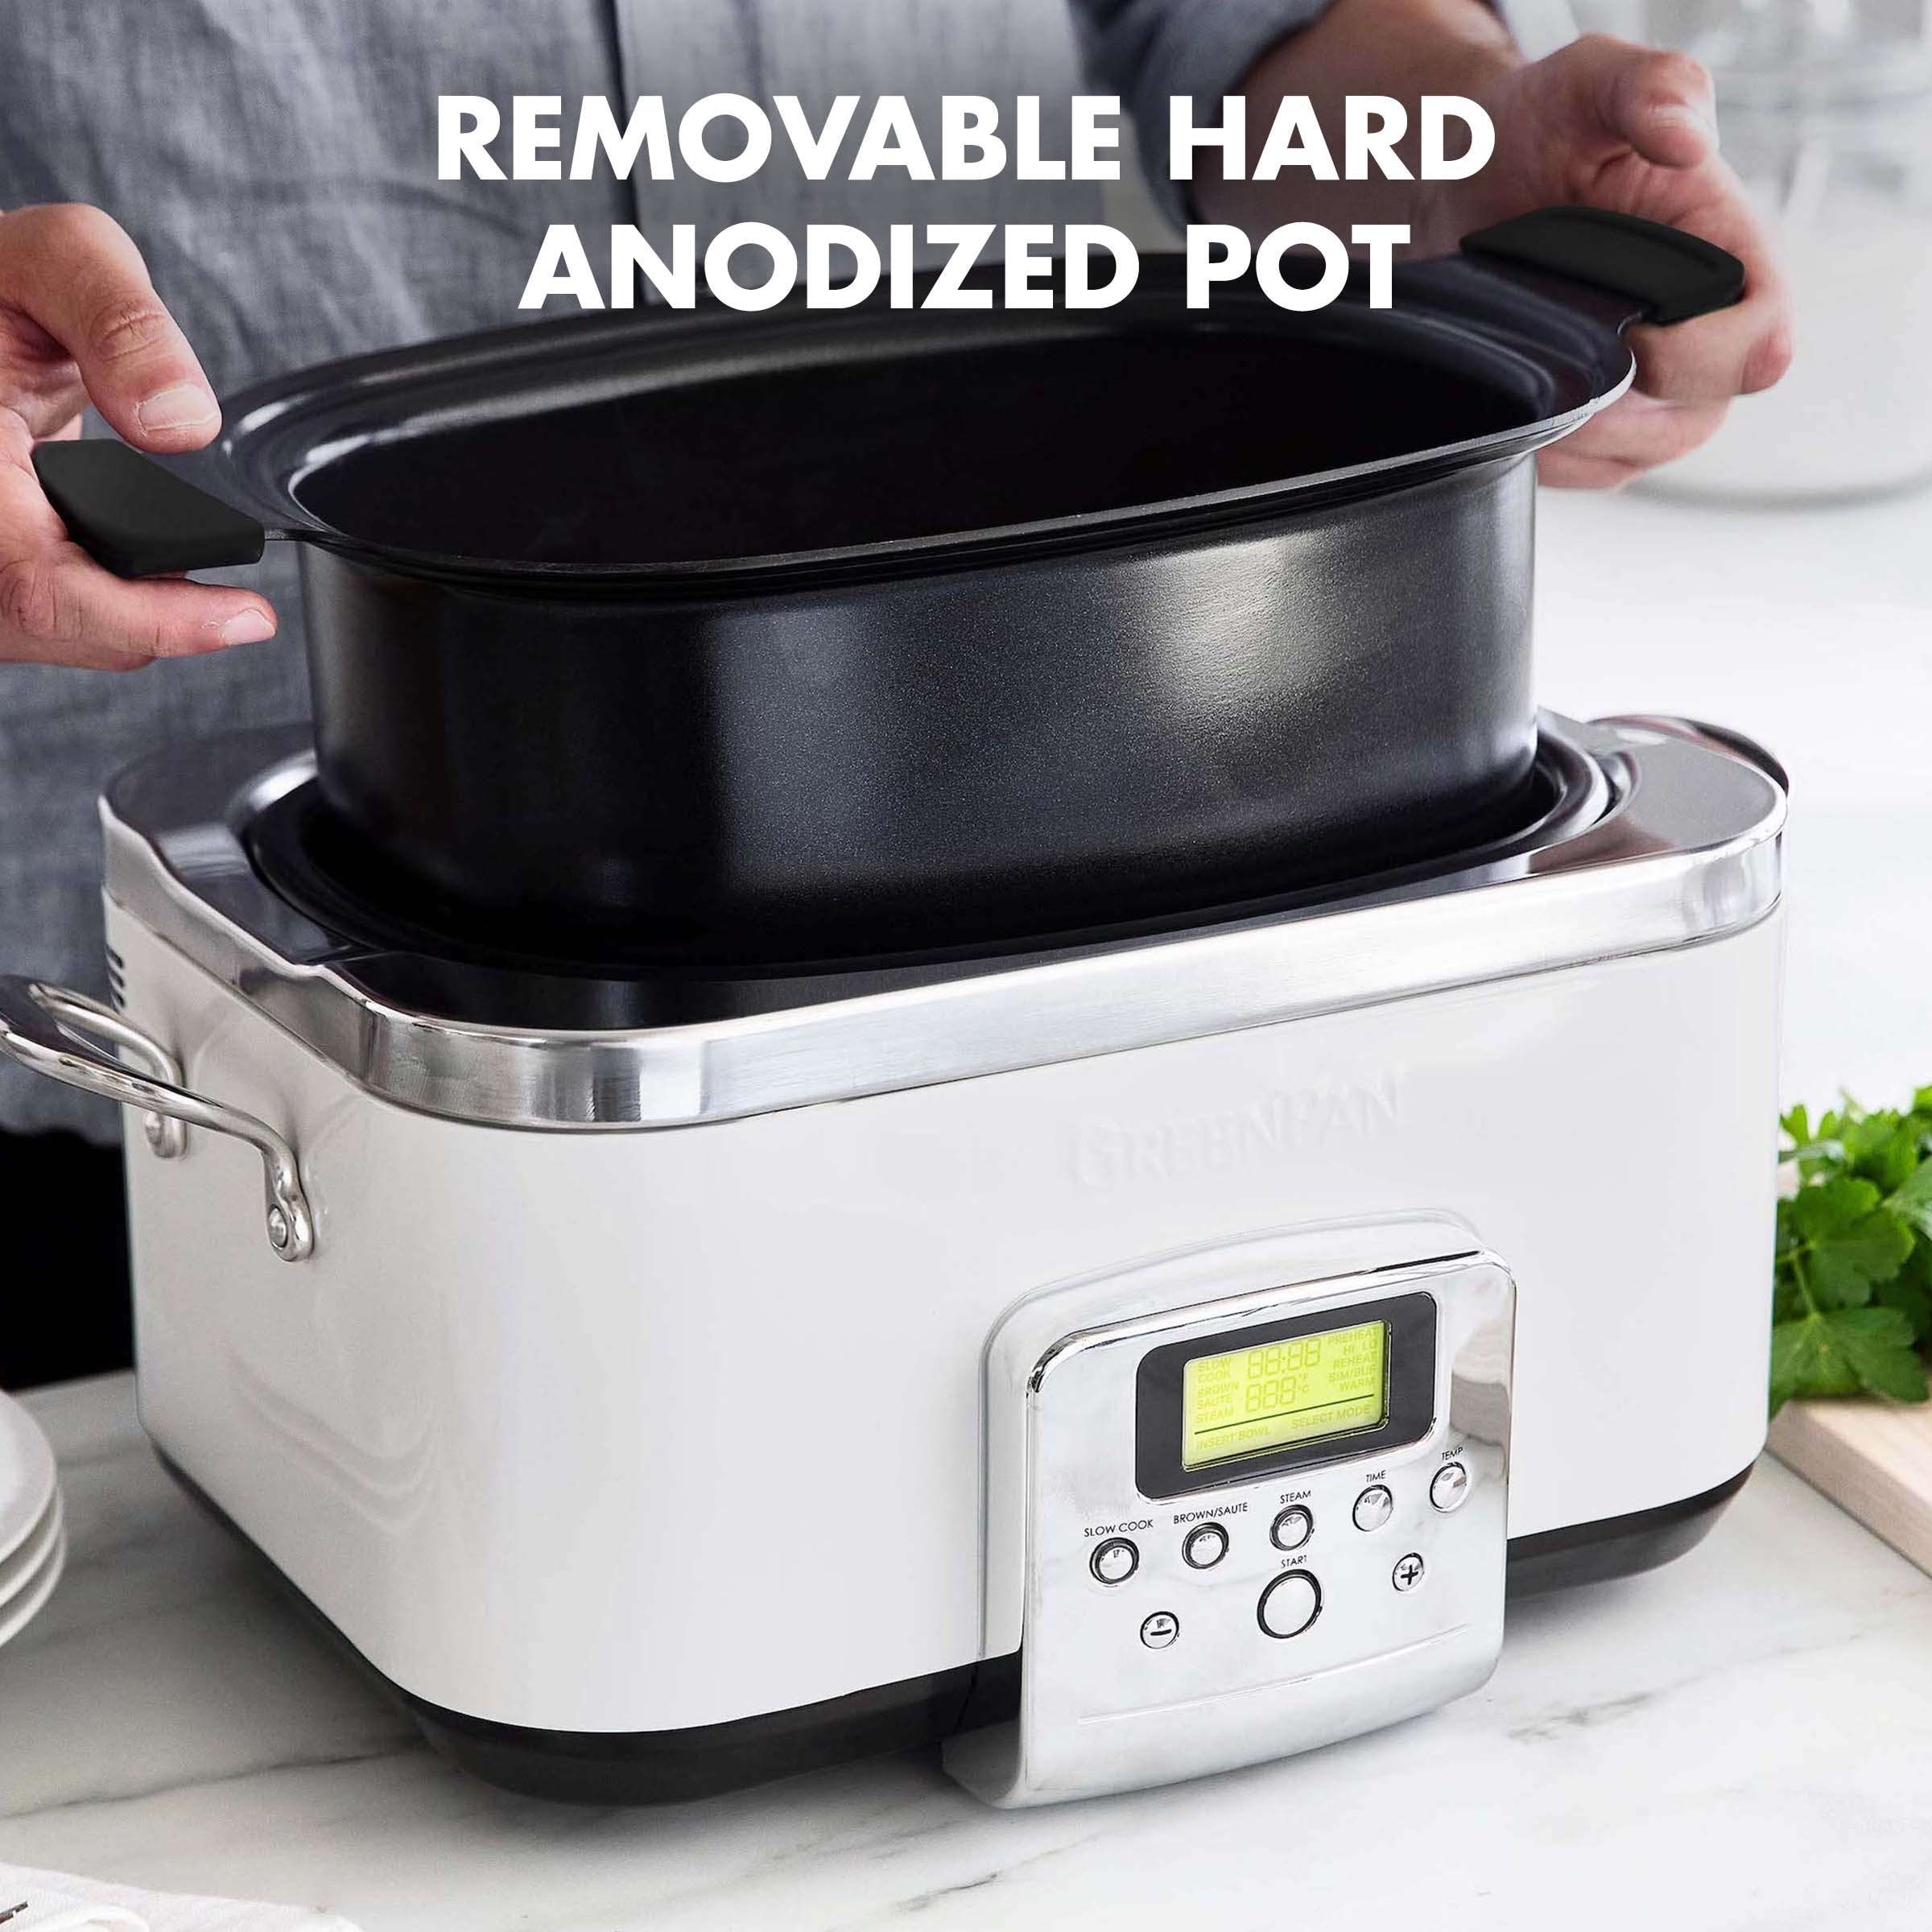 Smart Pot 6 Quart Slow Cooker, Brushed Stainless Steel - Bed Bath & Beyond  - 37688174